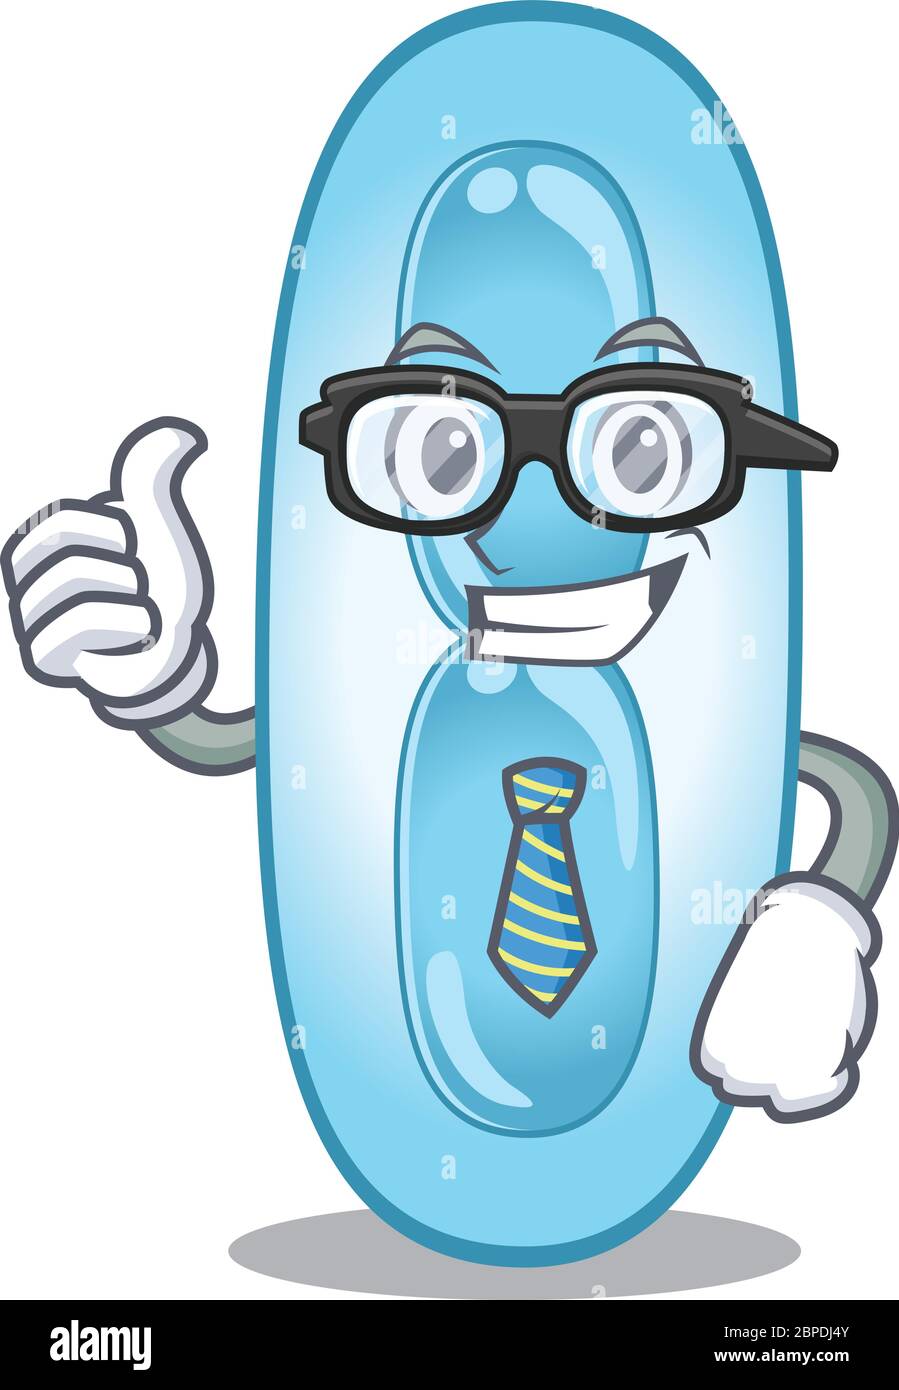 cartoon drawing of klebsiella pneumoniae Businessman wearing glasses and tie Stock Vector